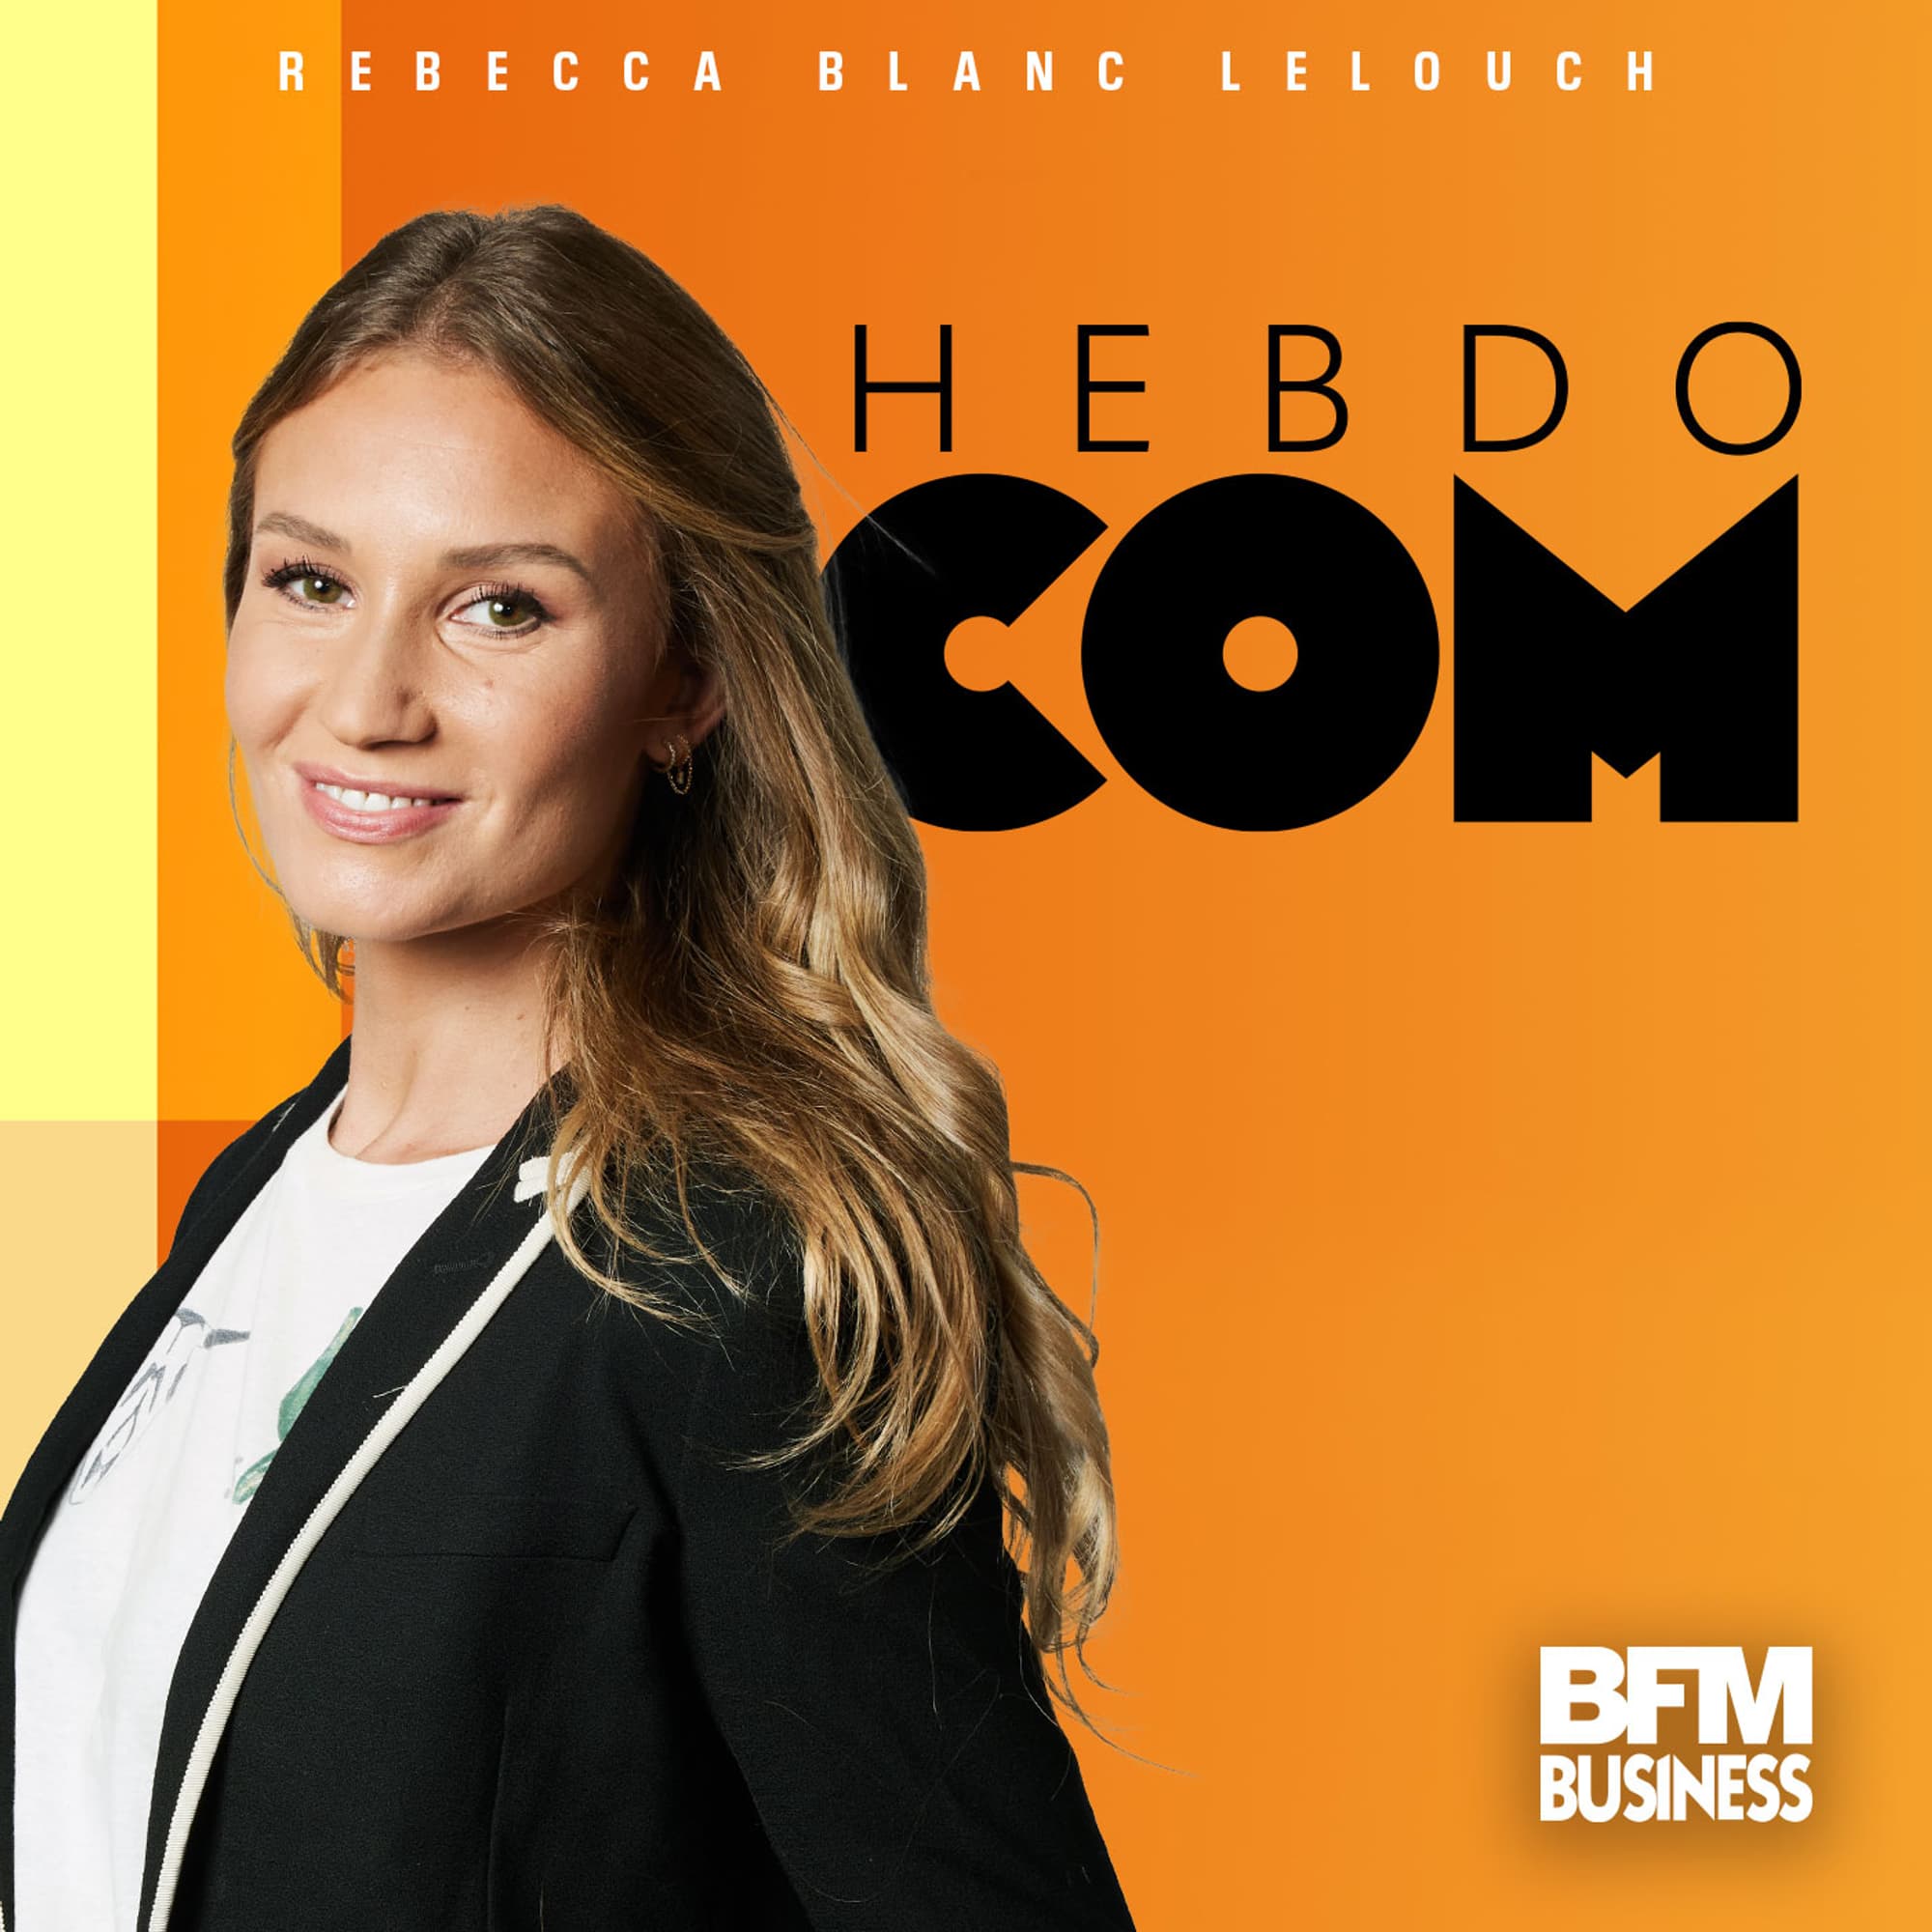 L'intégrale d'Hebdo Com du vendredi 22 septembre